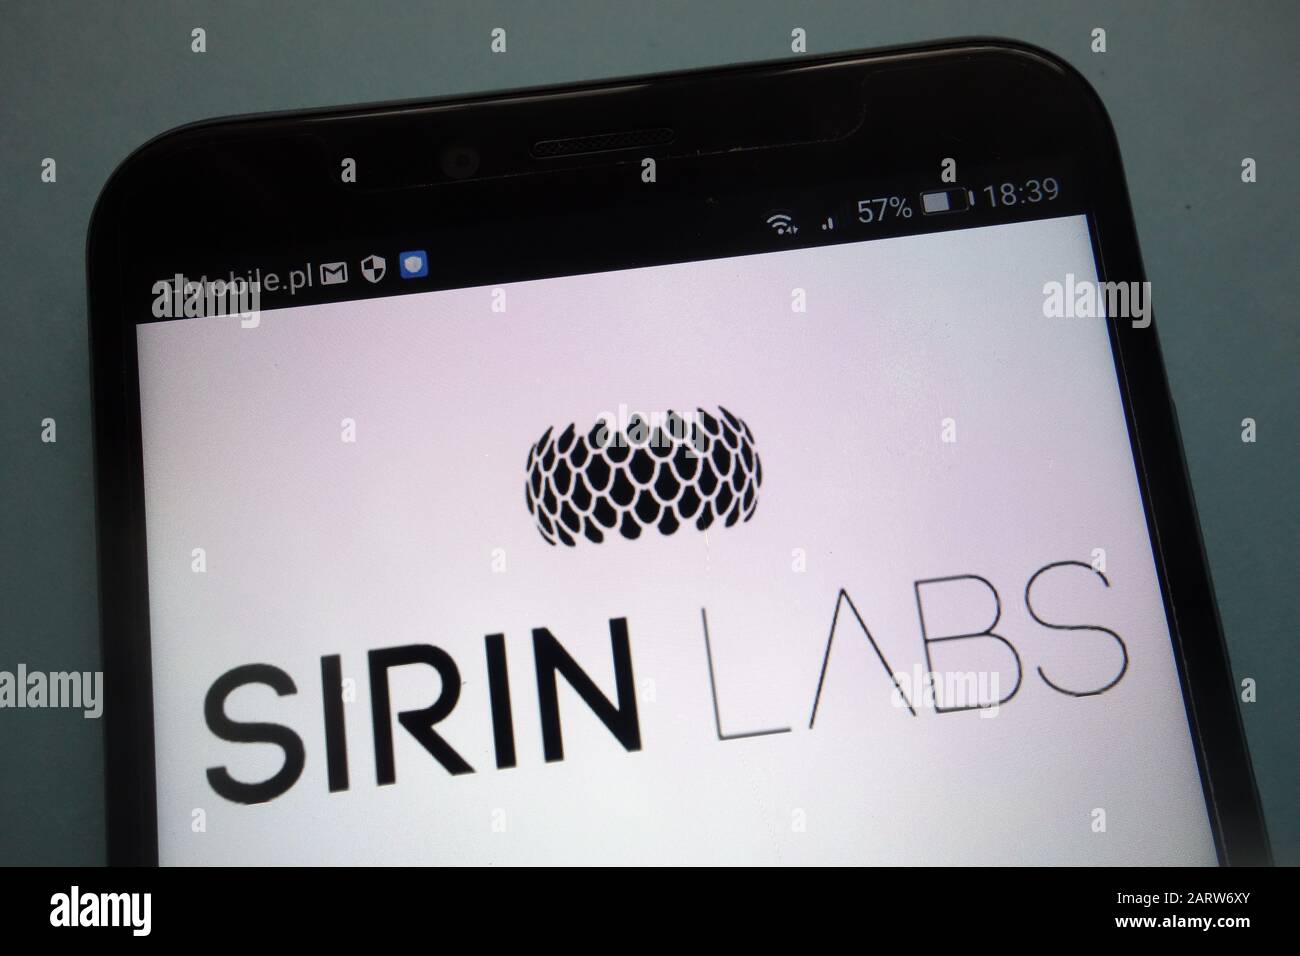 Sirin Labs logo on a smartphone Stock Photo